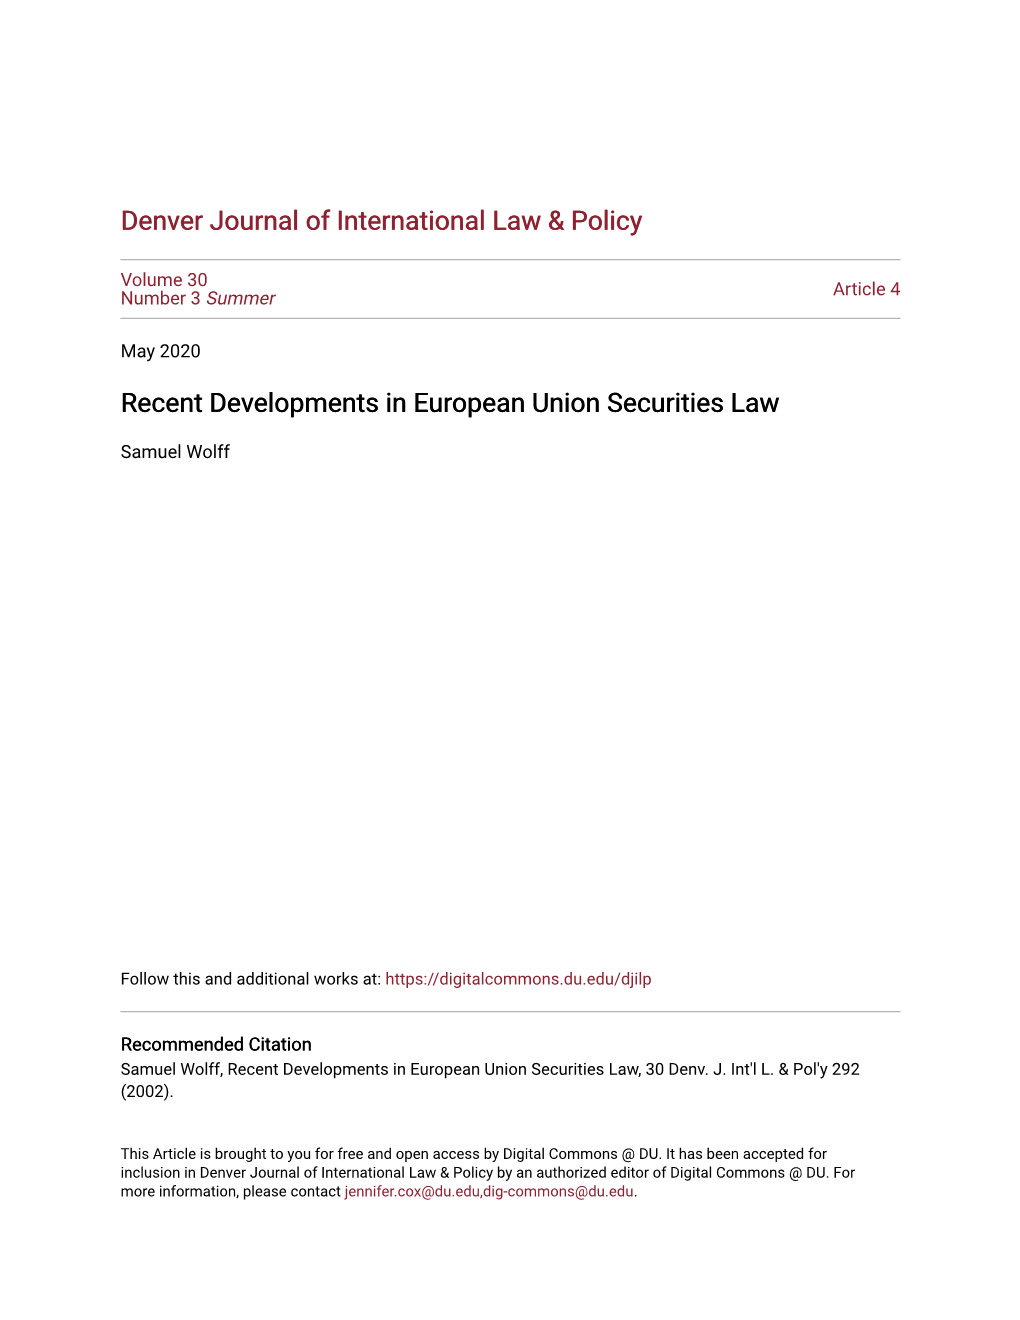 Recent Developments in European Union Securities Law